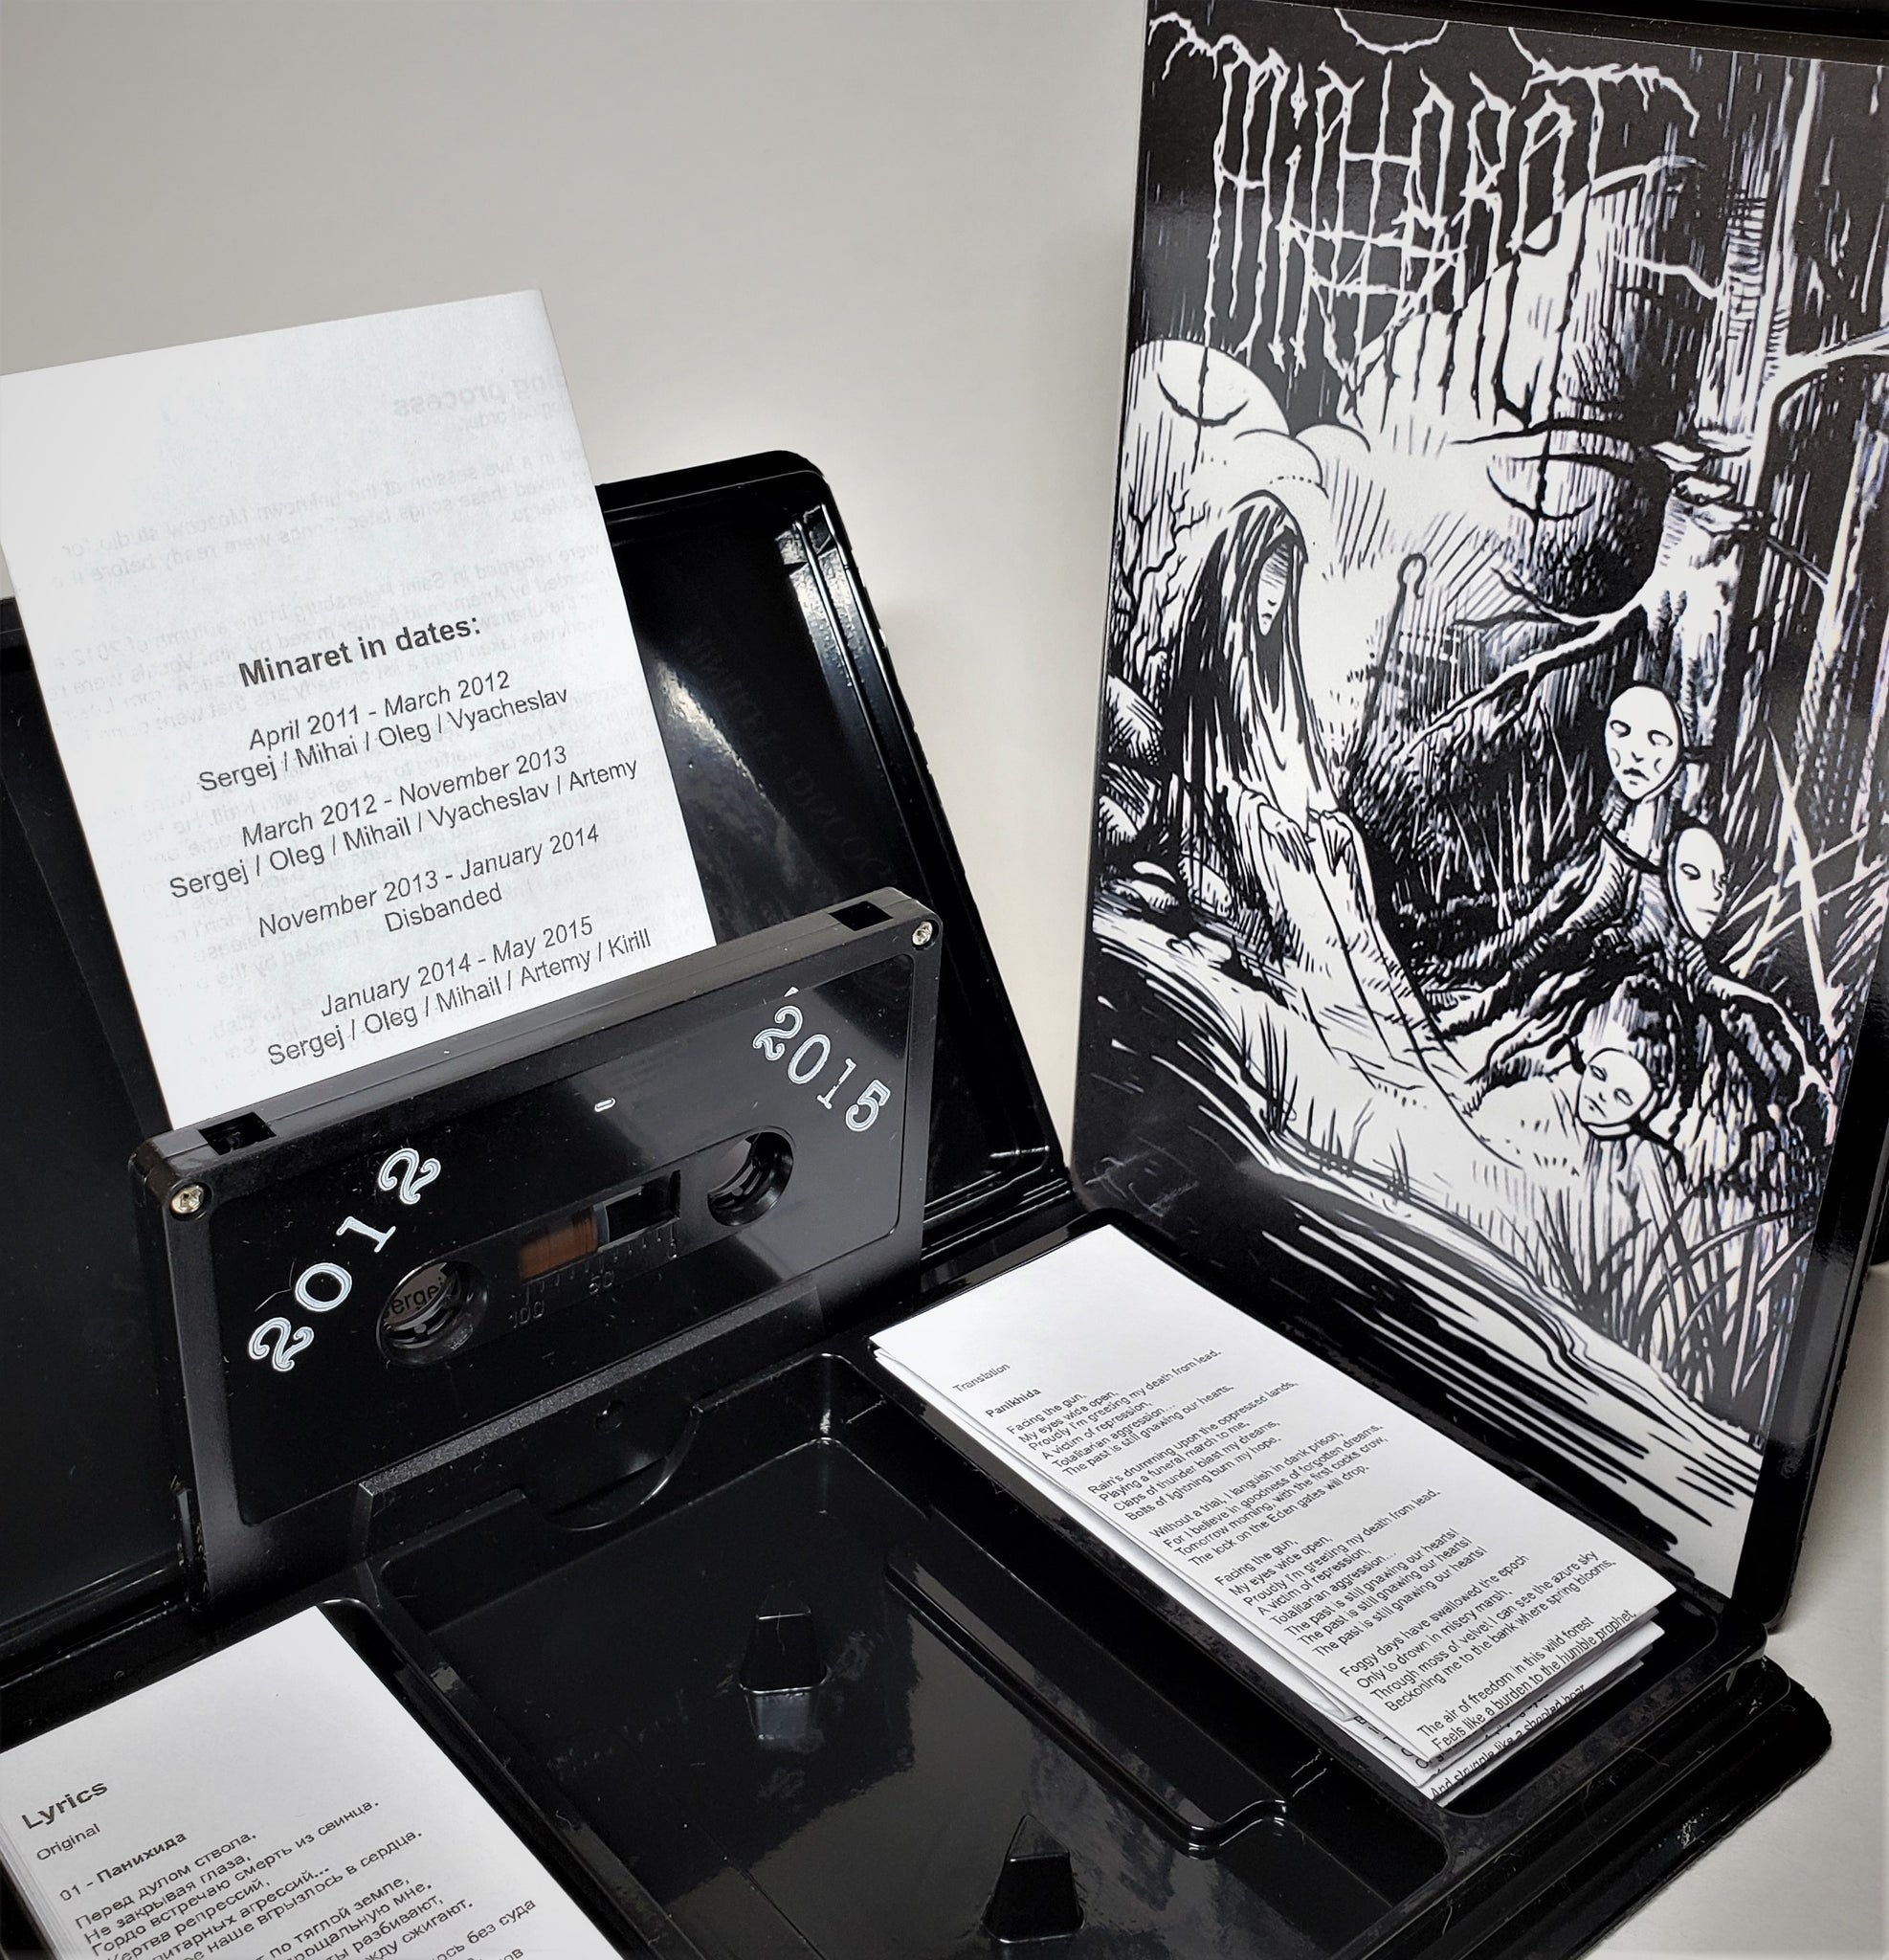 MINARET - Minaret Discography (cassette in vinyl case)